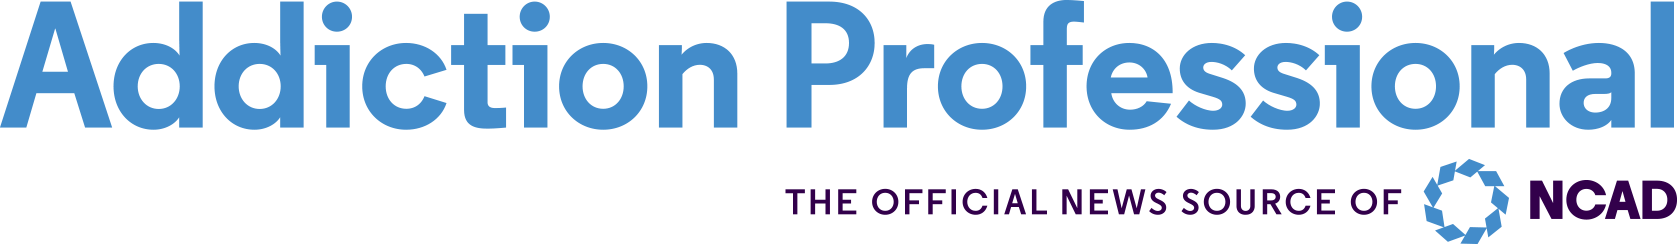 addiction professional logo